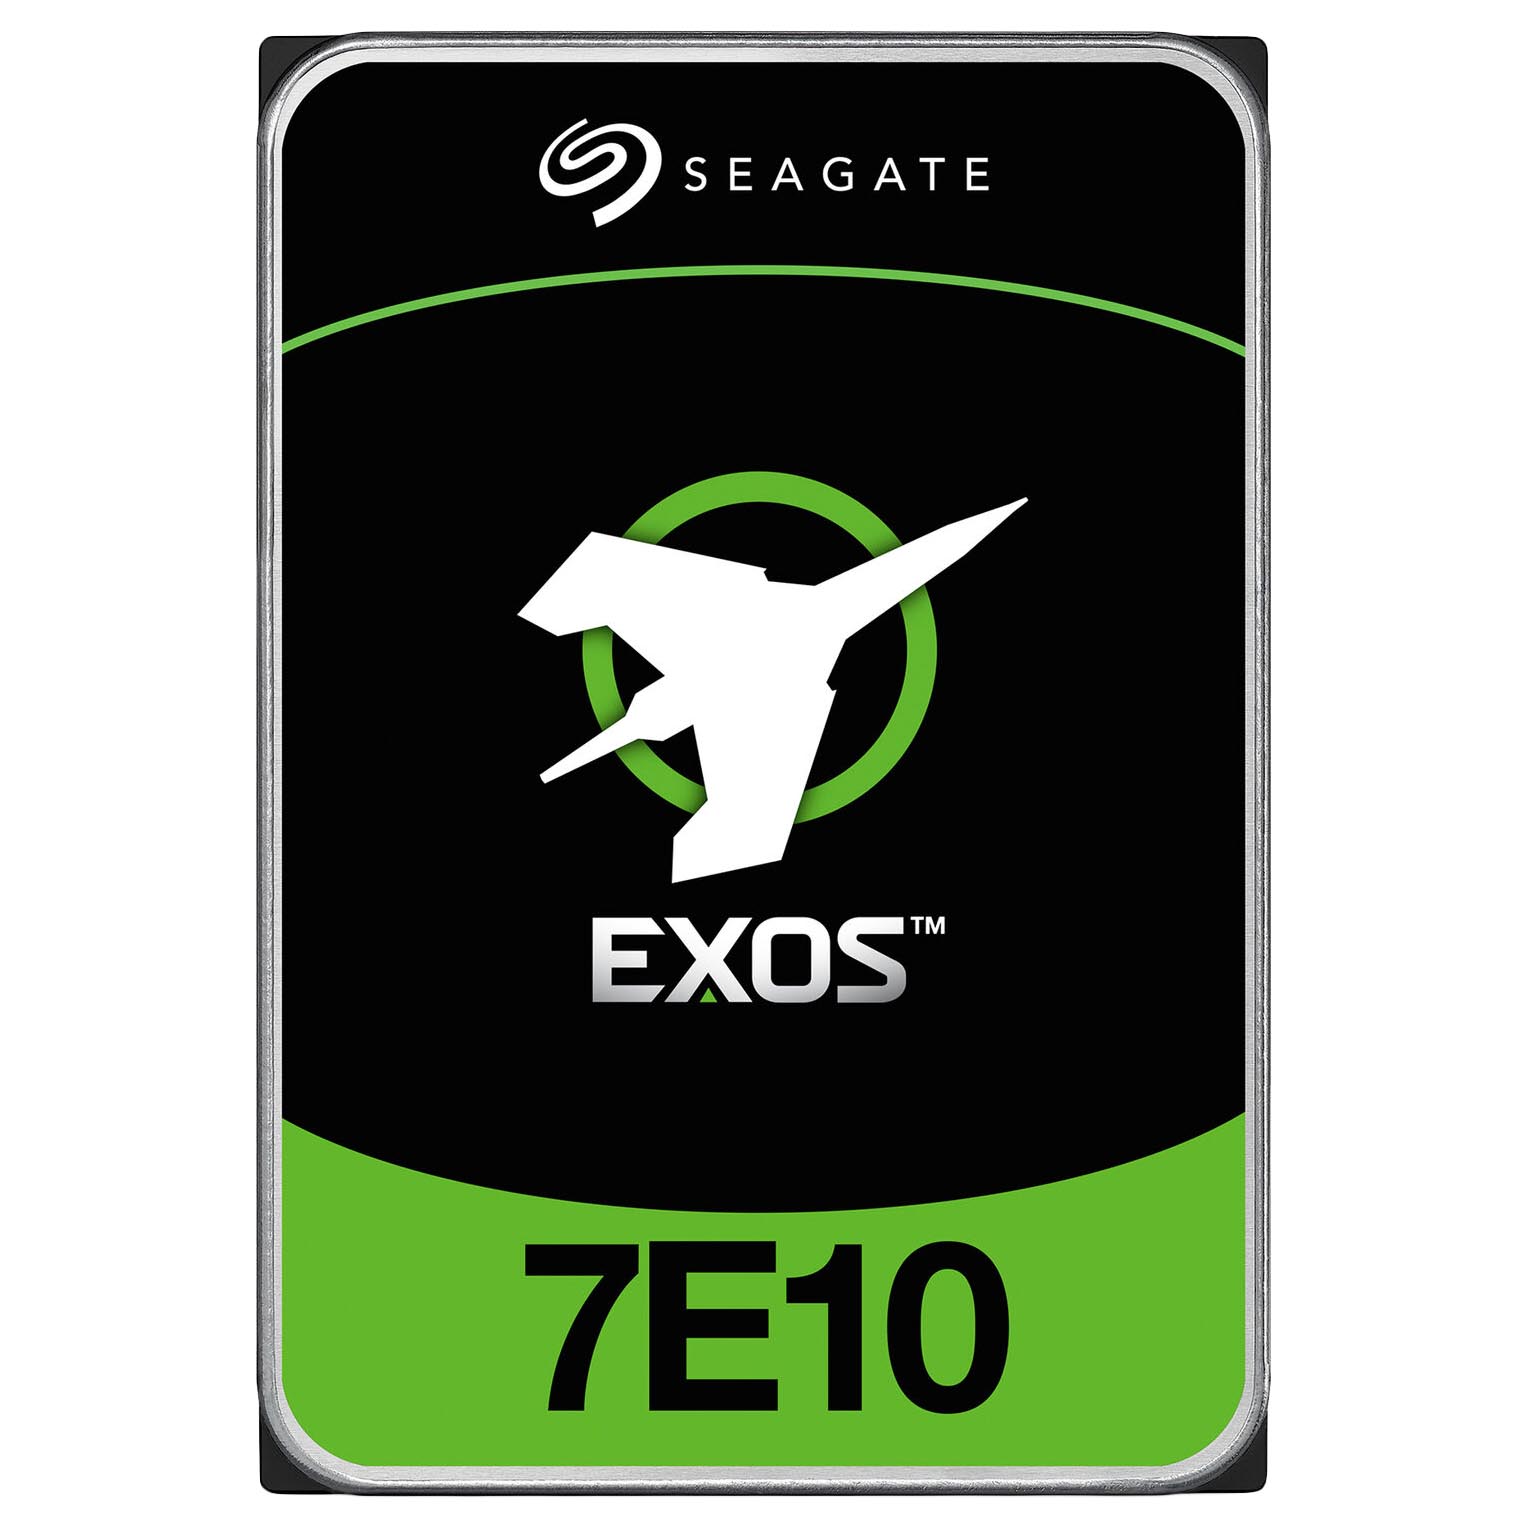 Внутренний жесткий диск Seagate Exos 7E10, ST10000NM017B, 10 Тб жесткий диск hdd seagate exos 7e10 2tb st2000nm017b